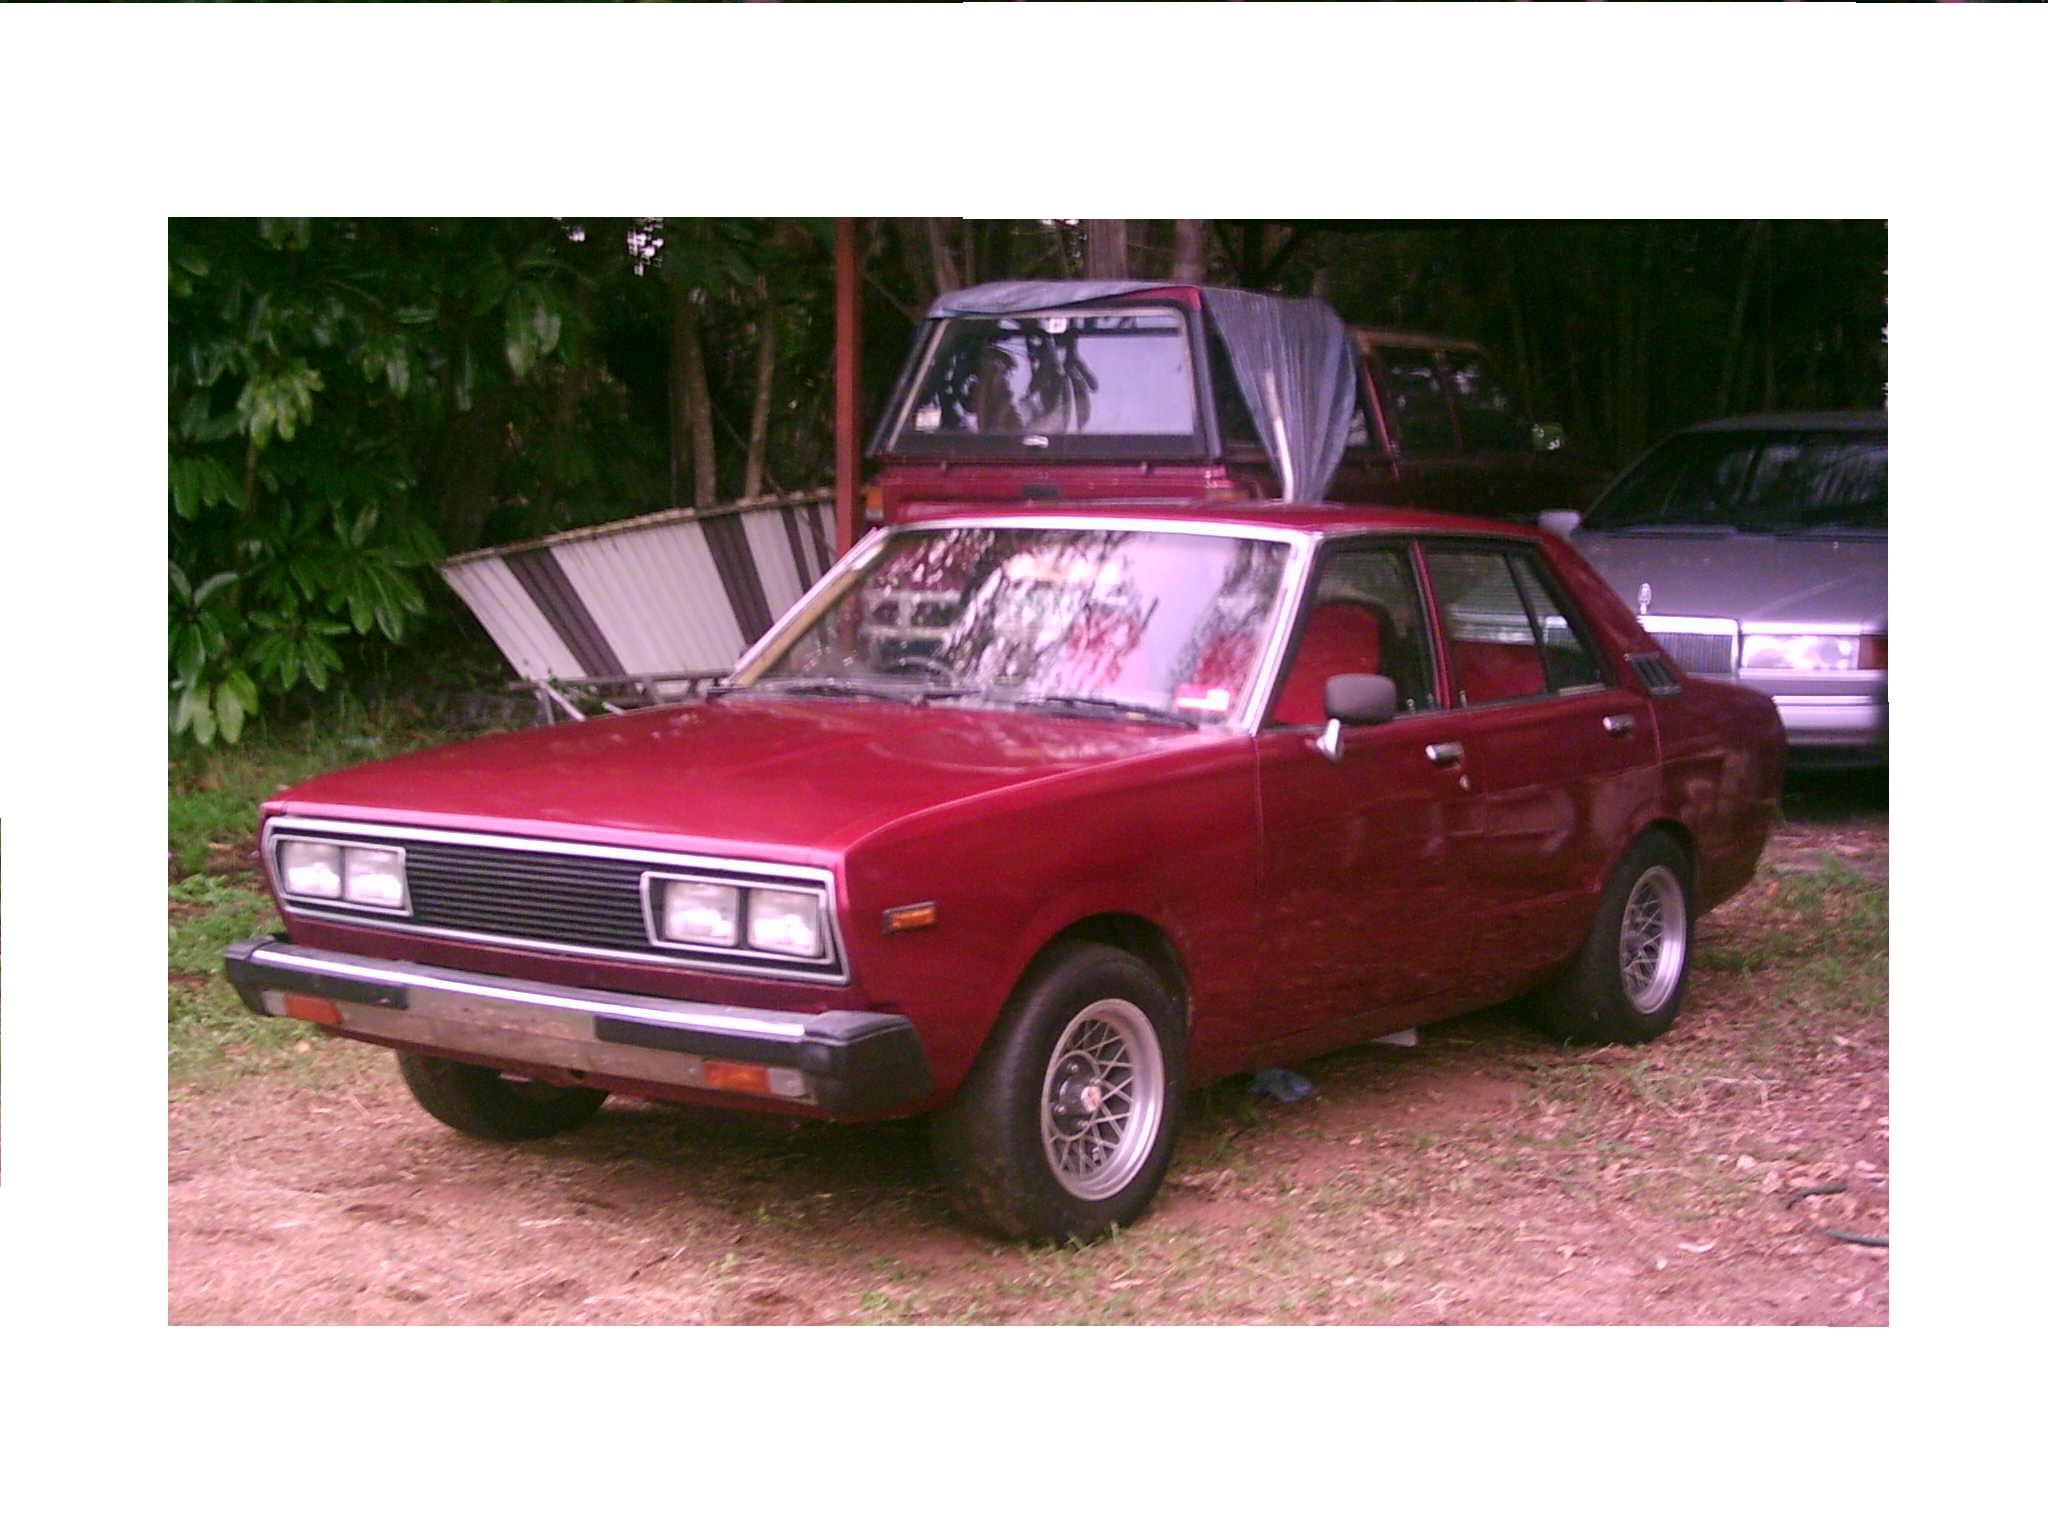  1980 Datsun Stanza sss